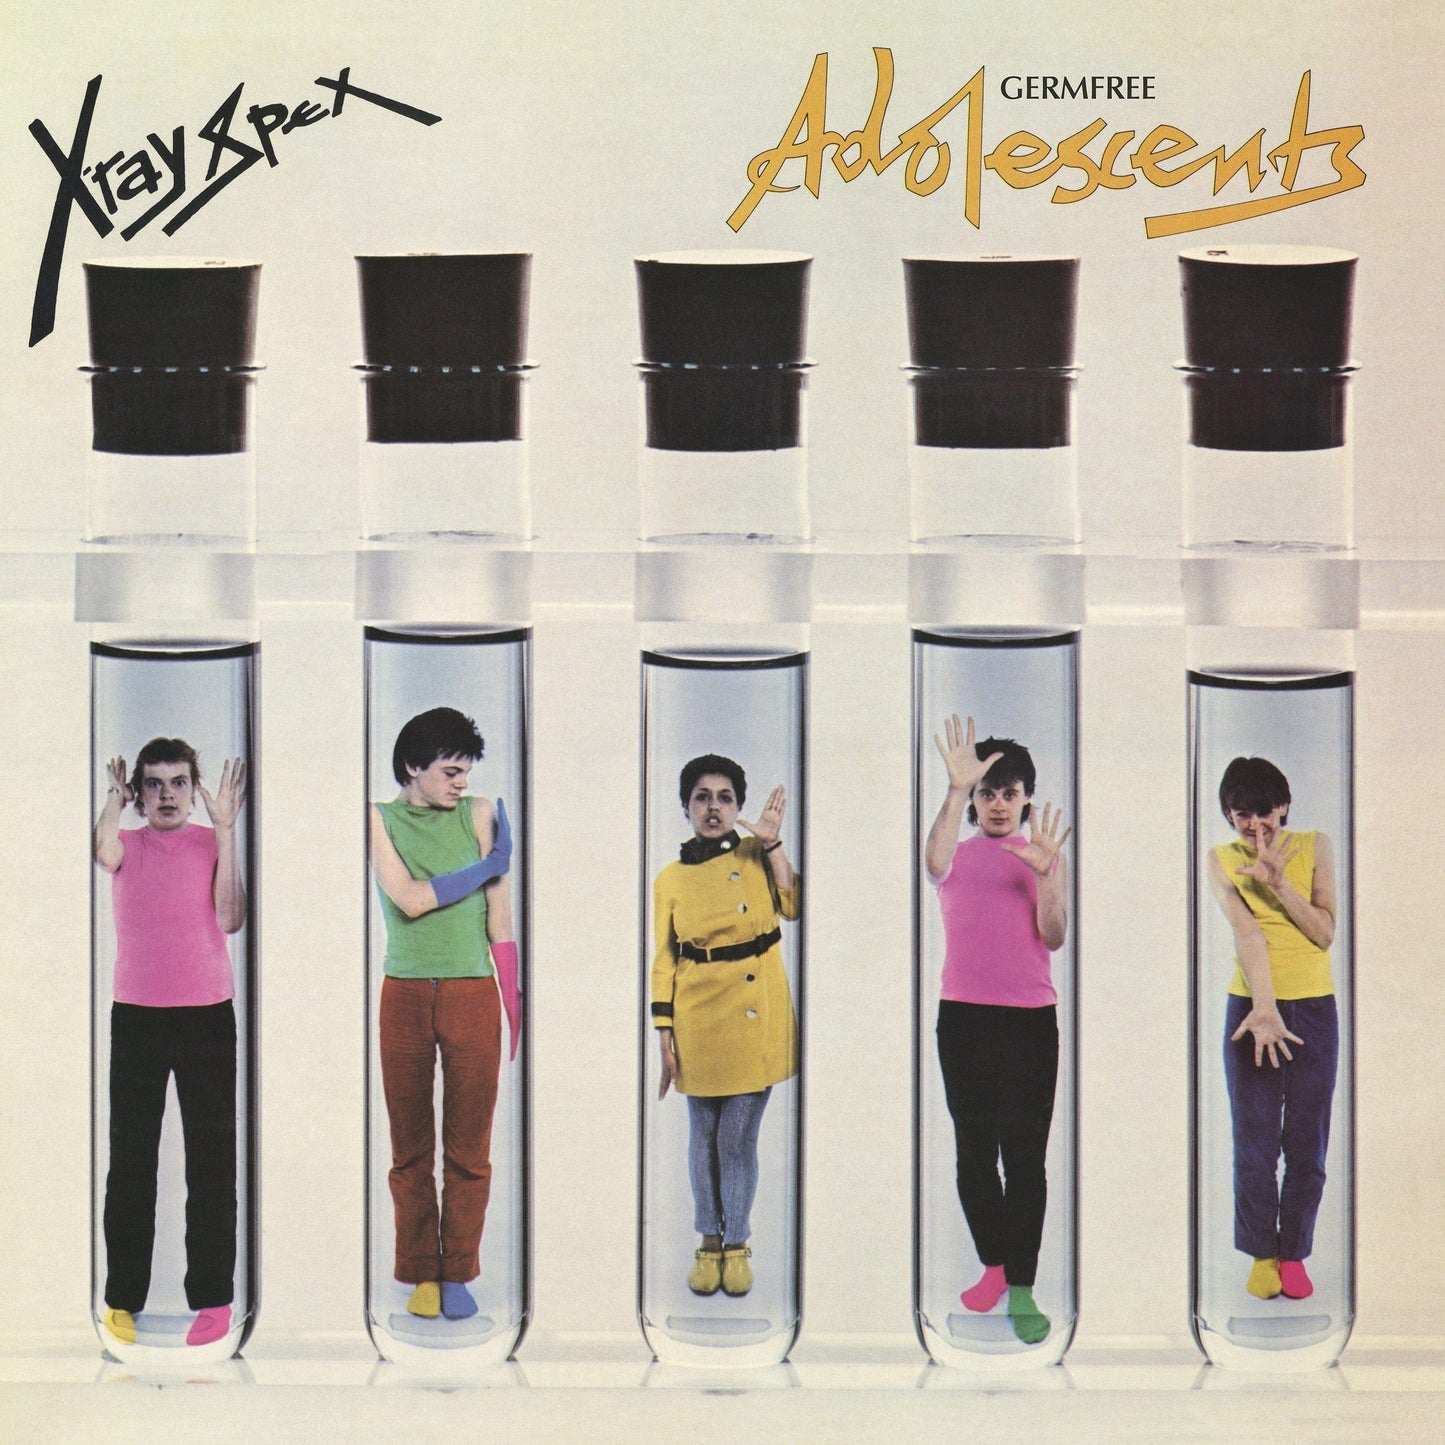 X-RAY SPEX: Germ Free Adolescents LP (Day Glo Pink vinyl)